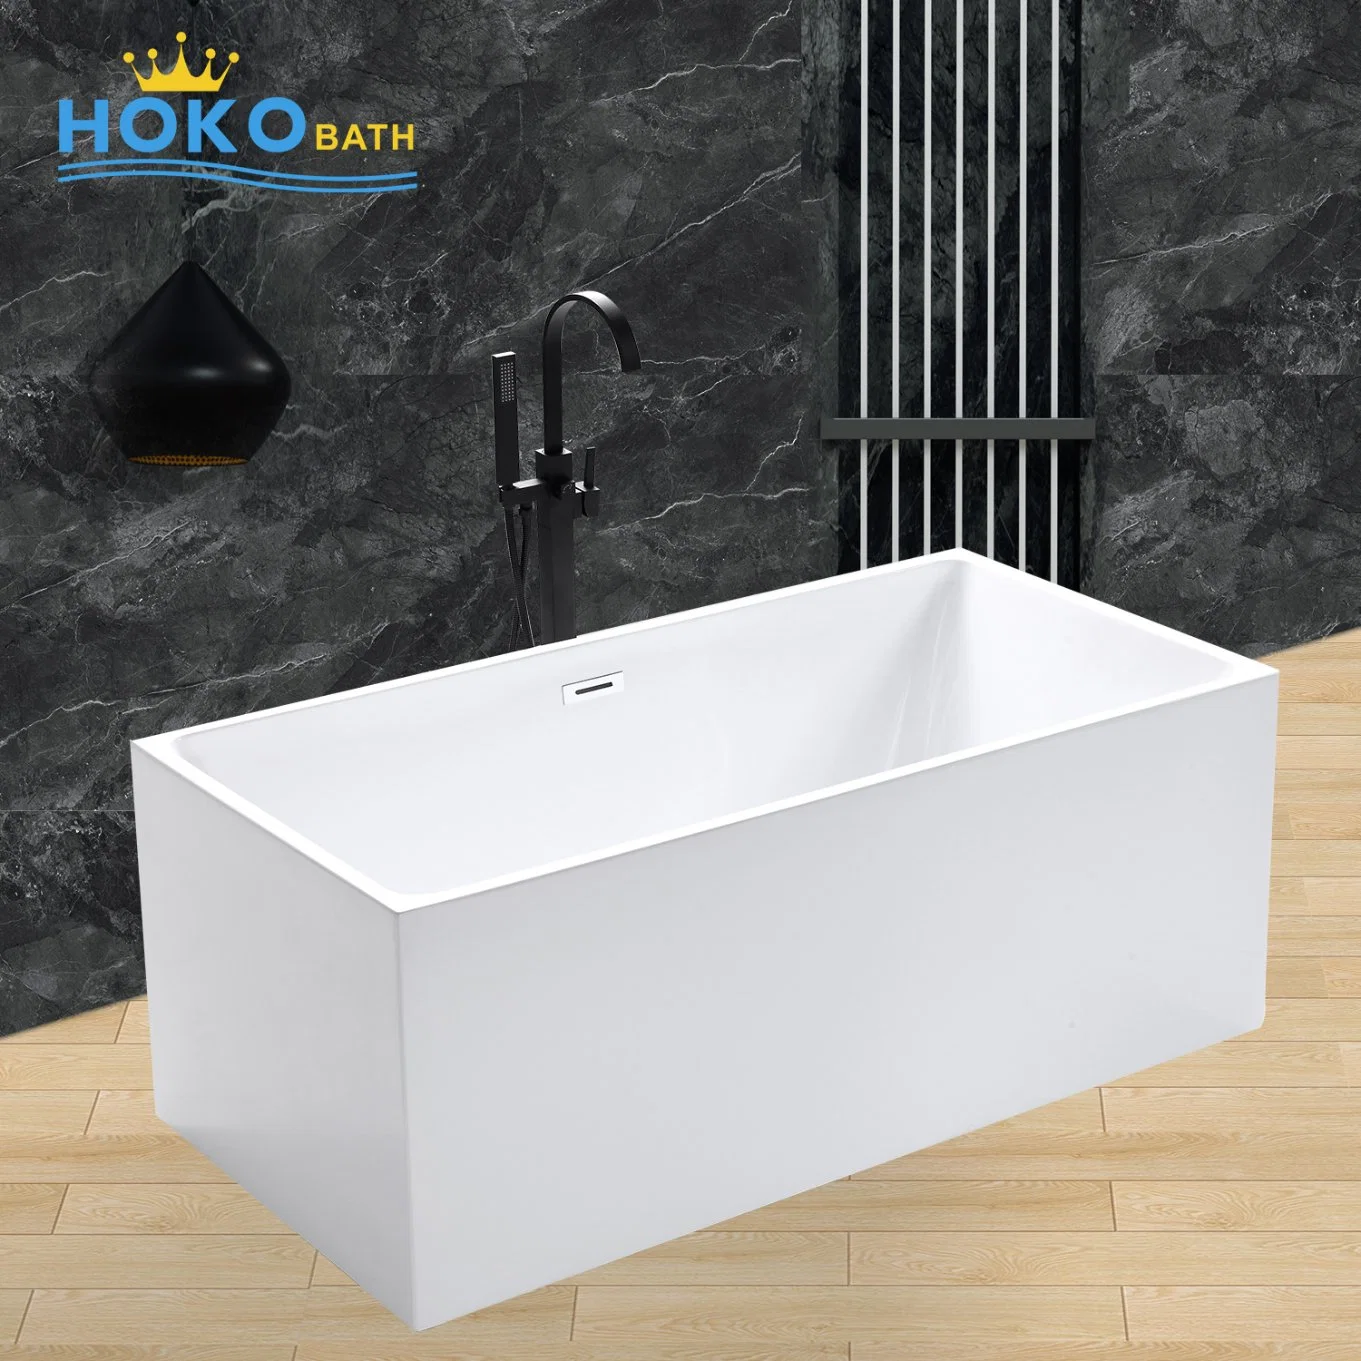 Rectangular Reversible Large Adult Bathroom Tub Acrylic Solid Surface Bathtub Freestanding Deep Soaking Bathtub with Center Drain Overflow